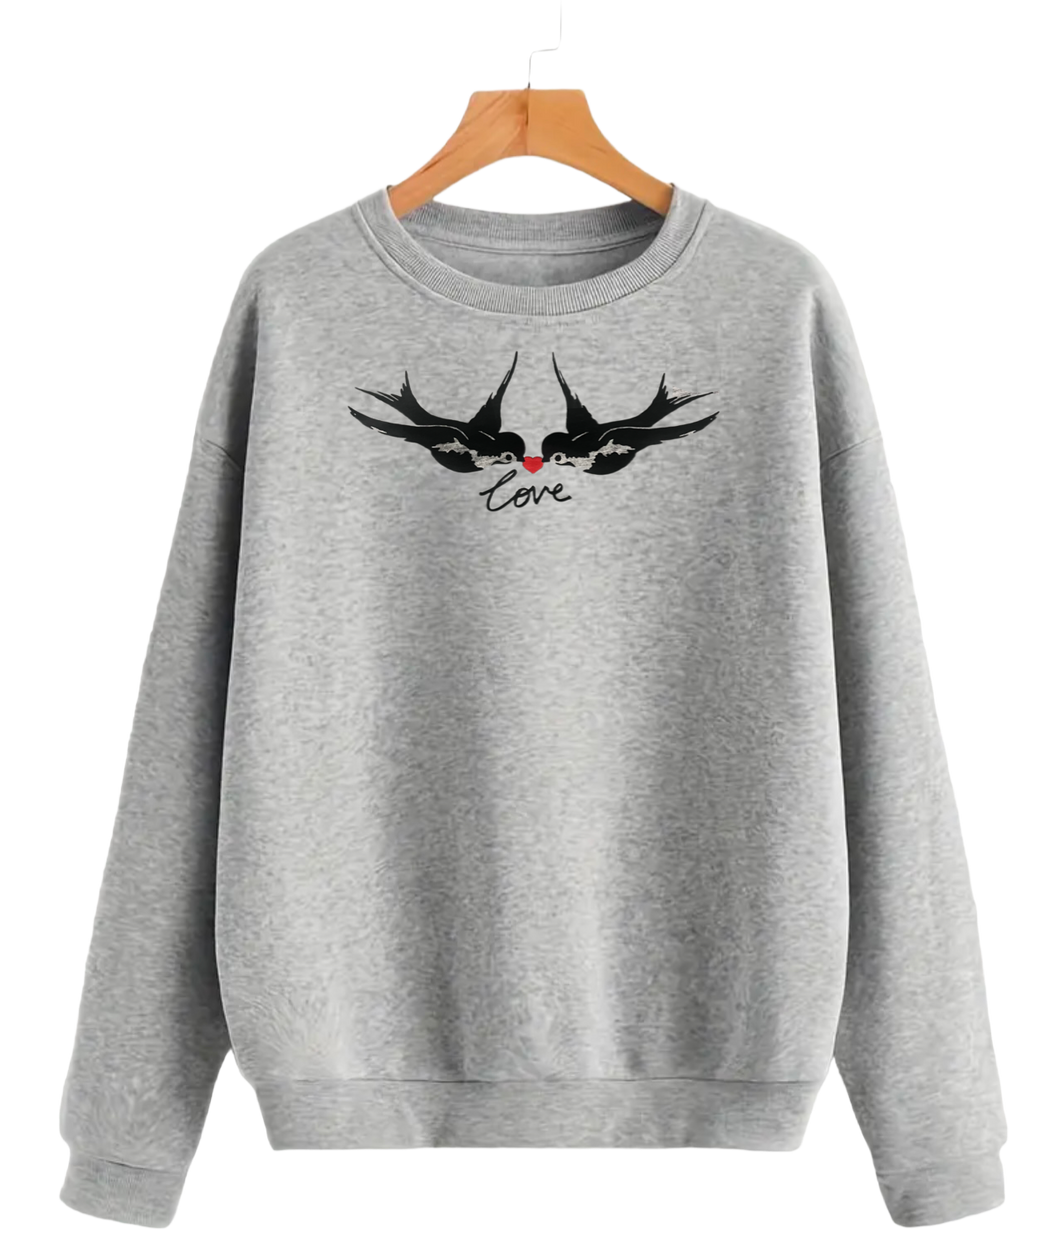 Love Birds Sweatshirt in Soft Grey.